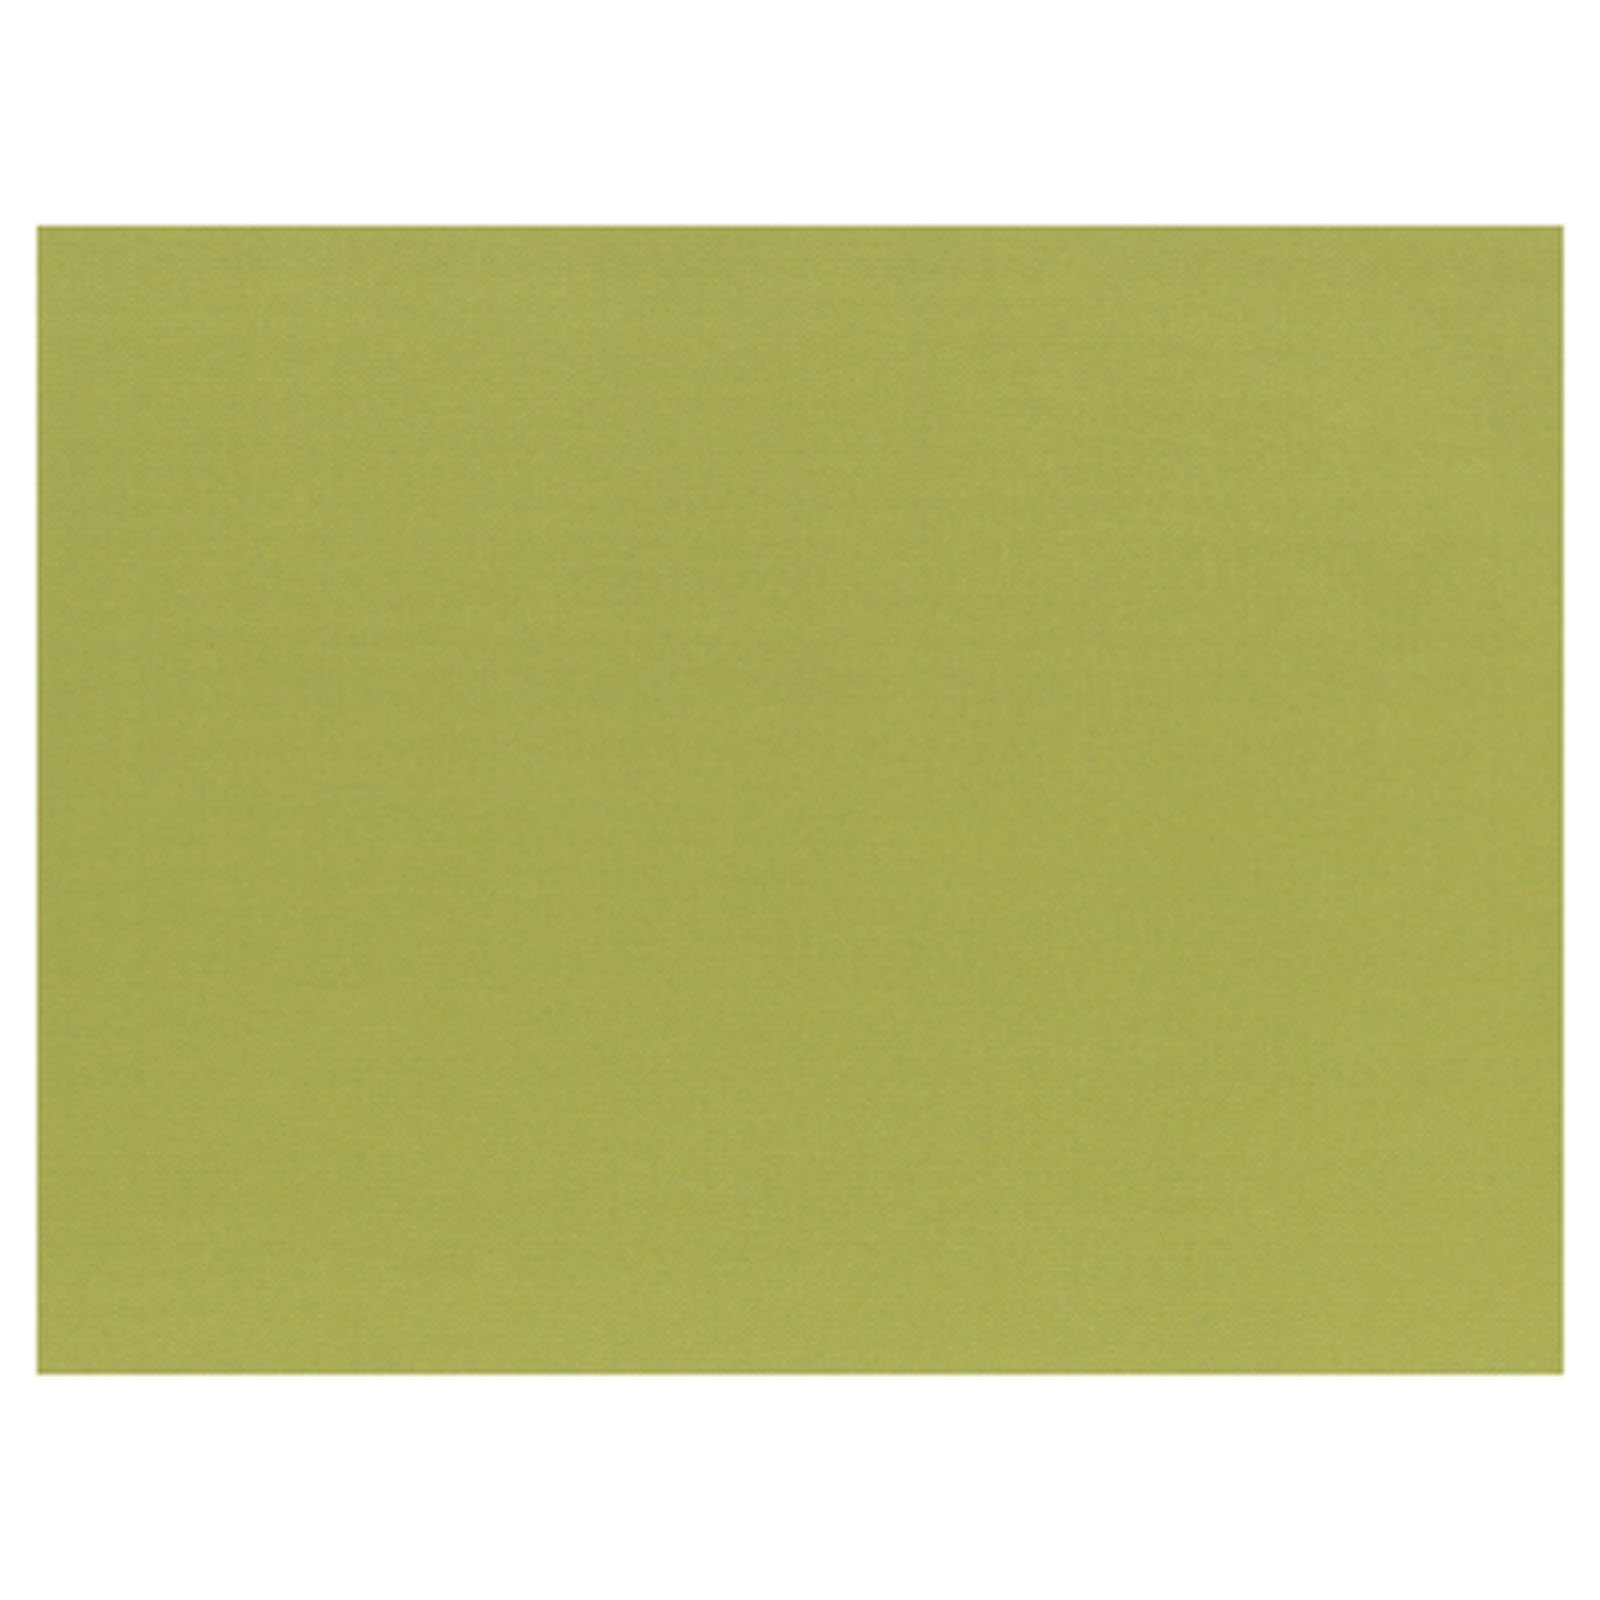 PAPSTAR Einwegschale 1000 Stück Papier Tischsets, olivgrün 30 x 40 cm